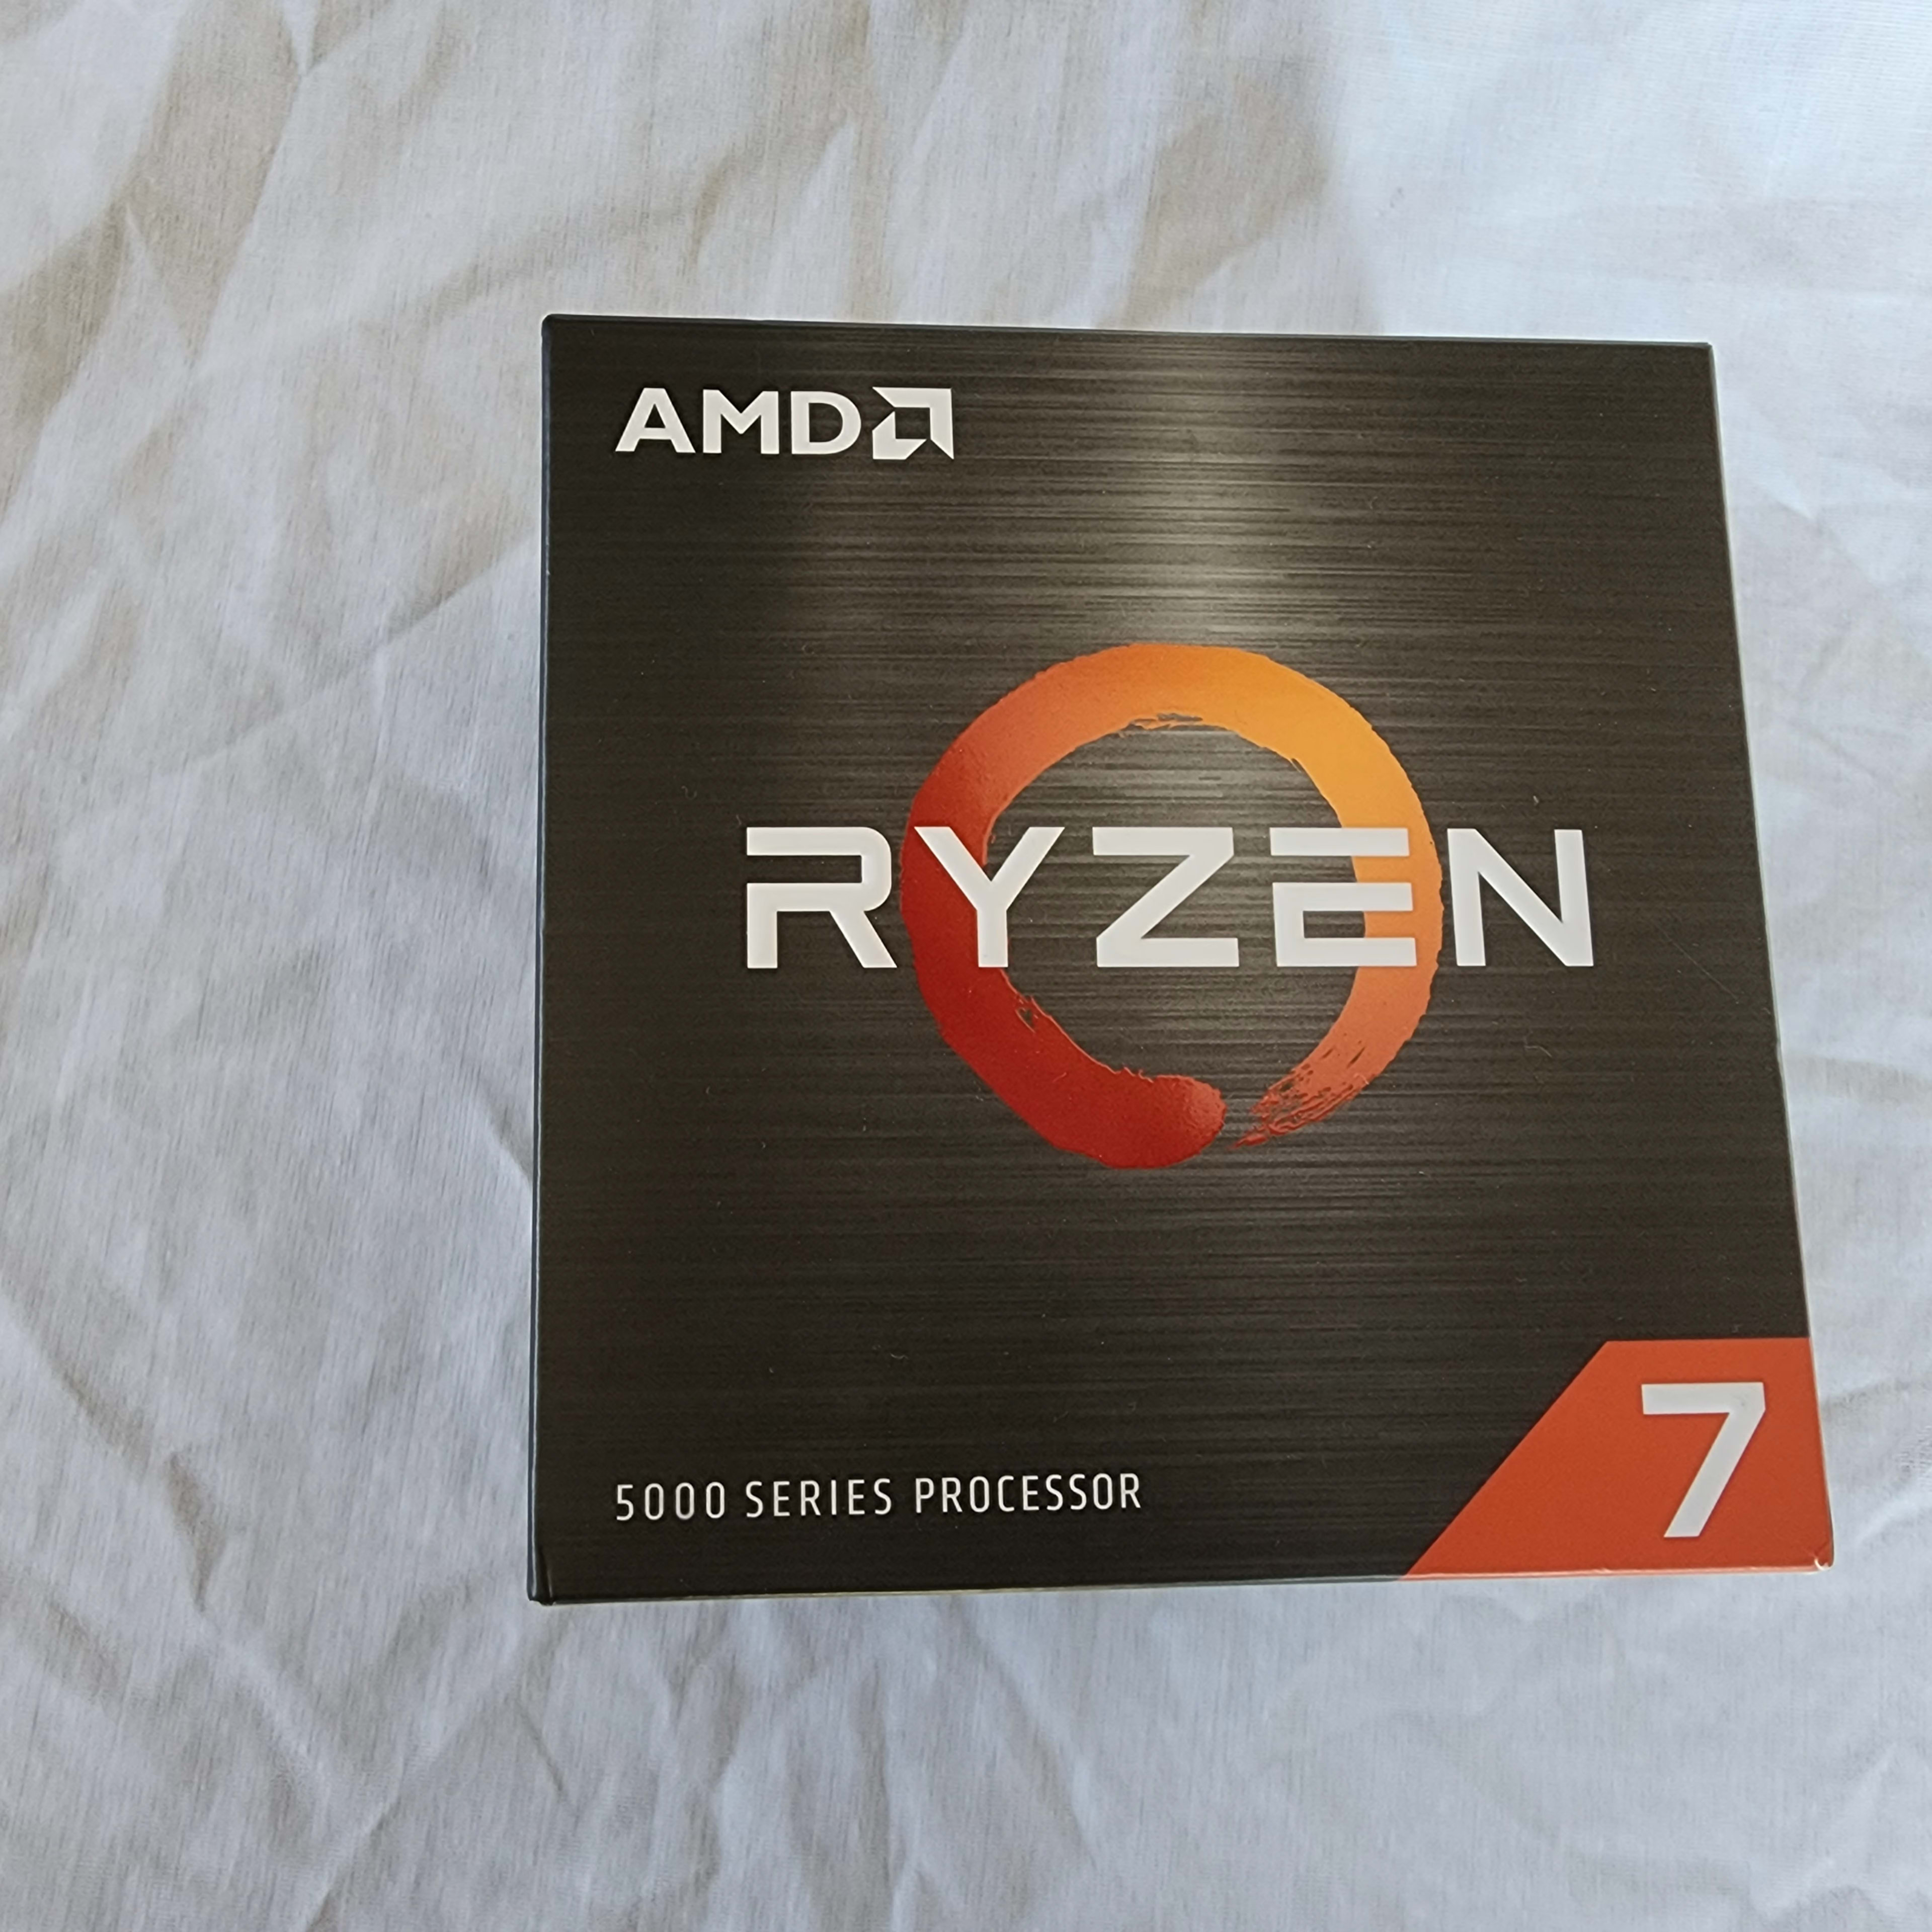 AMD Ryzen 7 5800x 8-Core CPU Used, Like New in Retail Box | Jawa